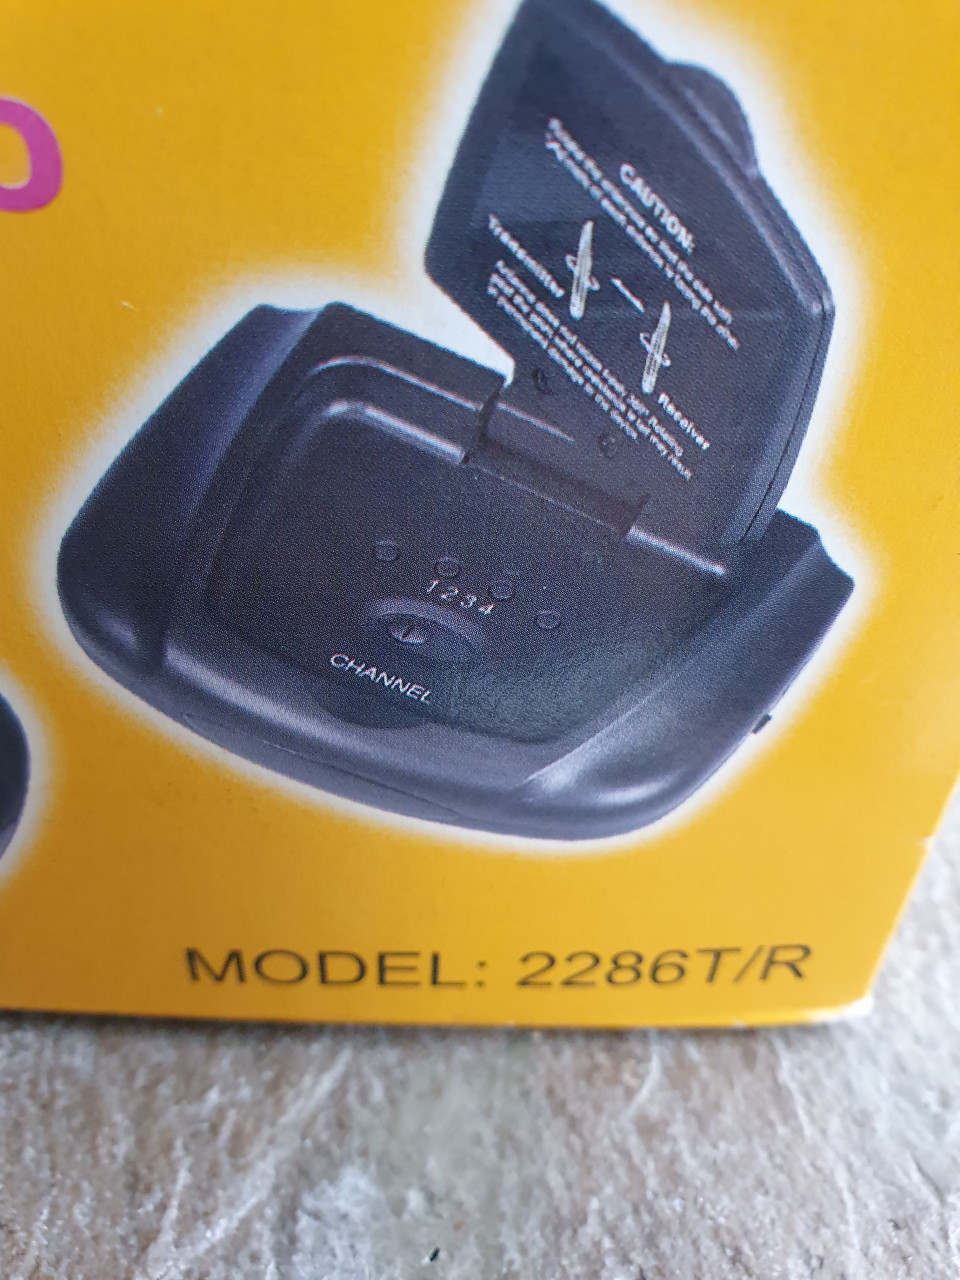 Zgan leuk vintage compleet video/audio transmission set Speaka model 2286..